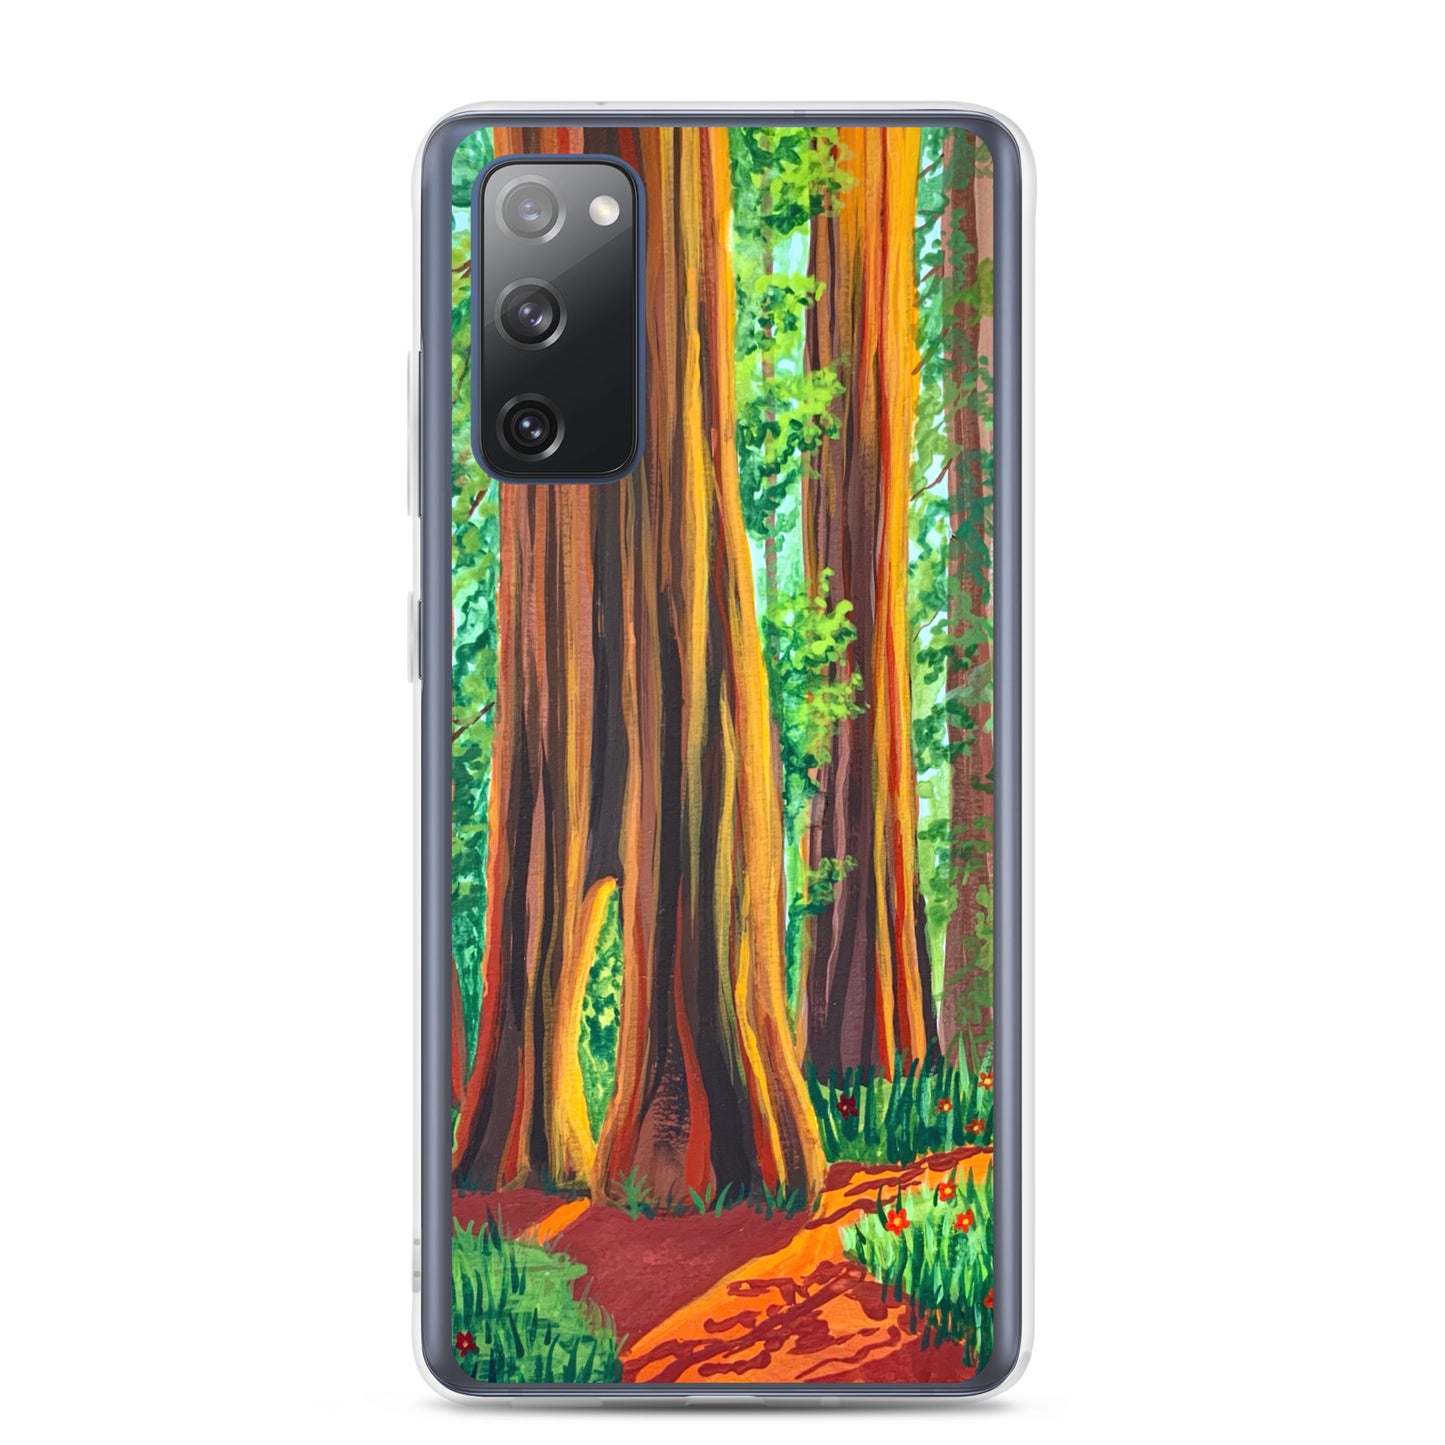 Sequoia National Park Samsung Phone Case